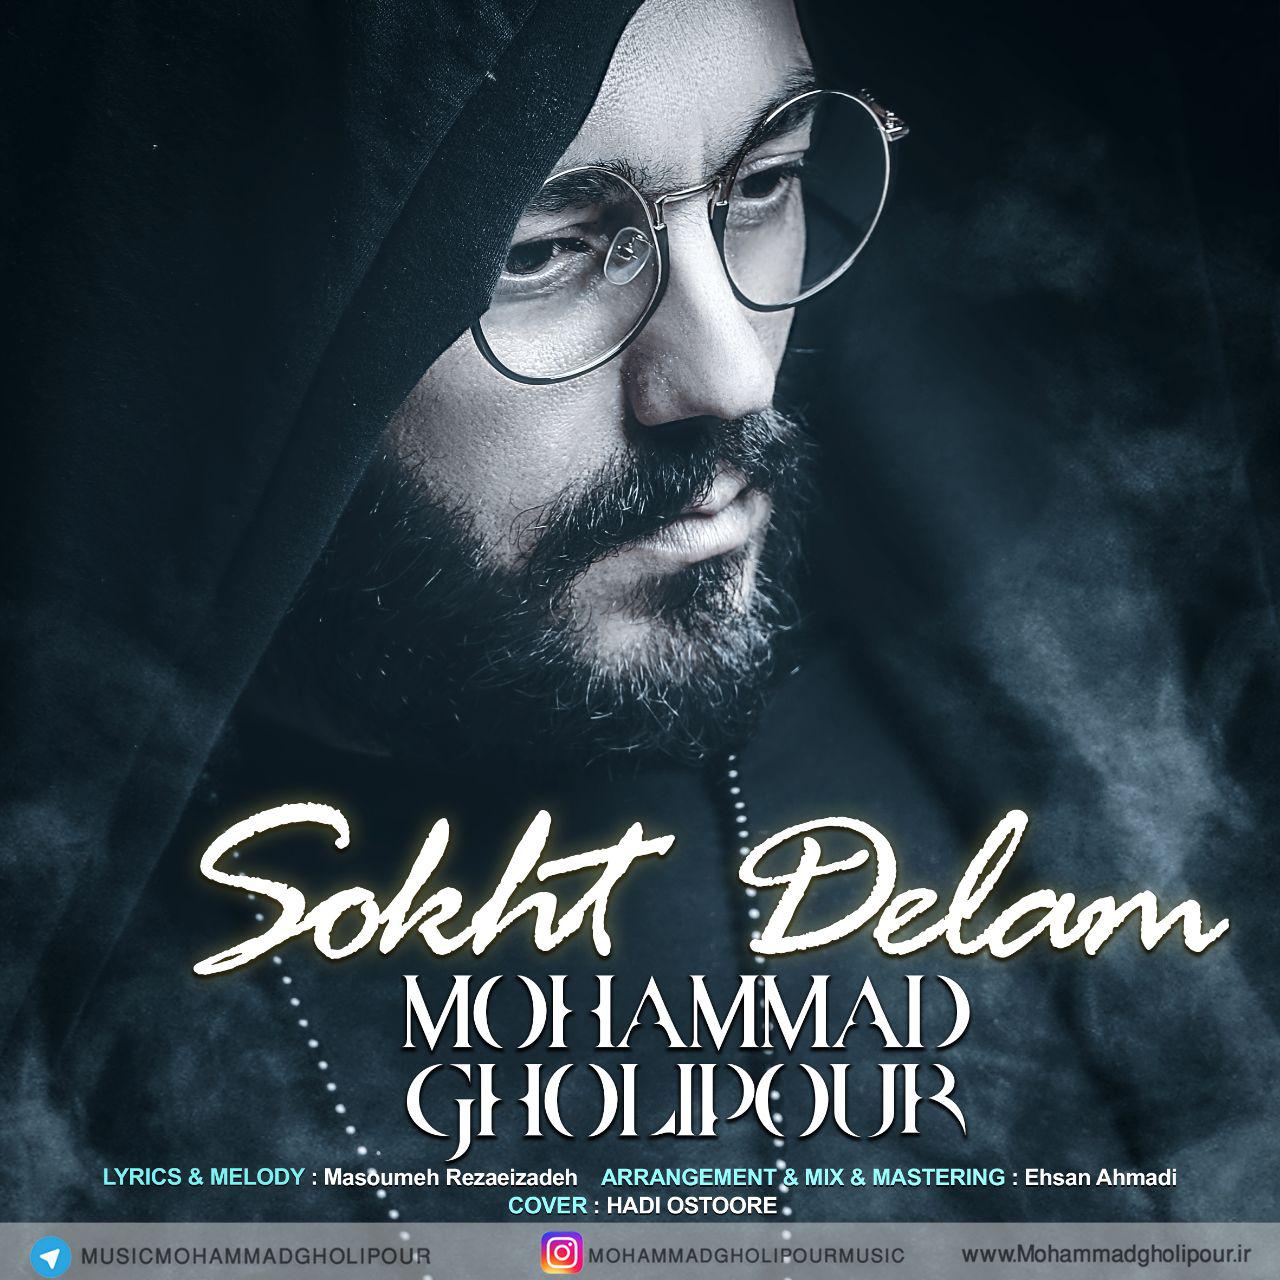  دانلود آهنگ جدید محمد قلی پور - سوخت دلم | Download New Music By Mohammad Gholipour - Sokht Delam